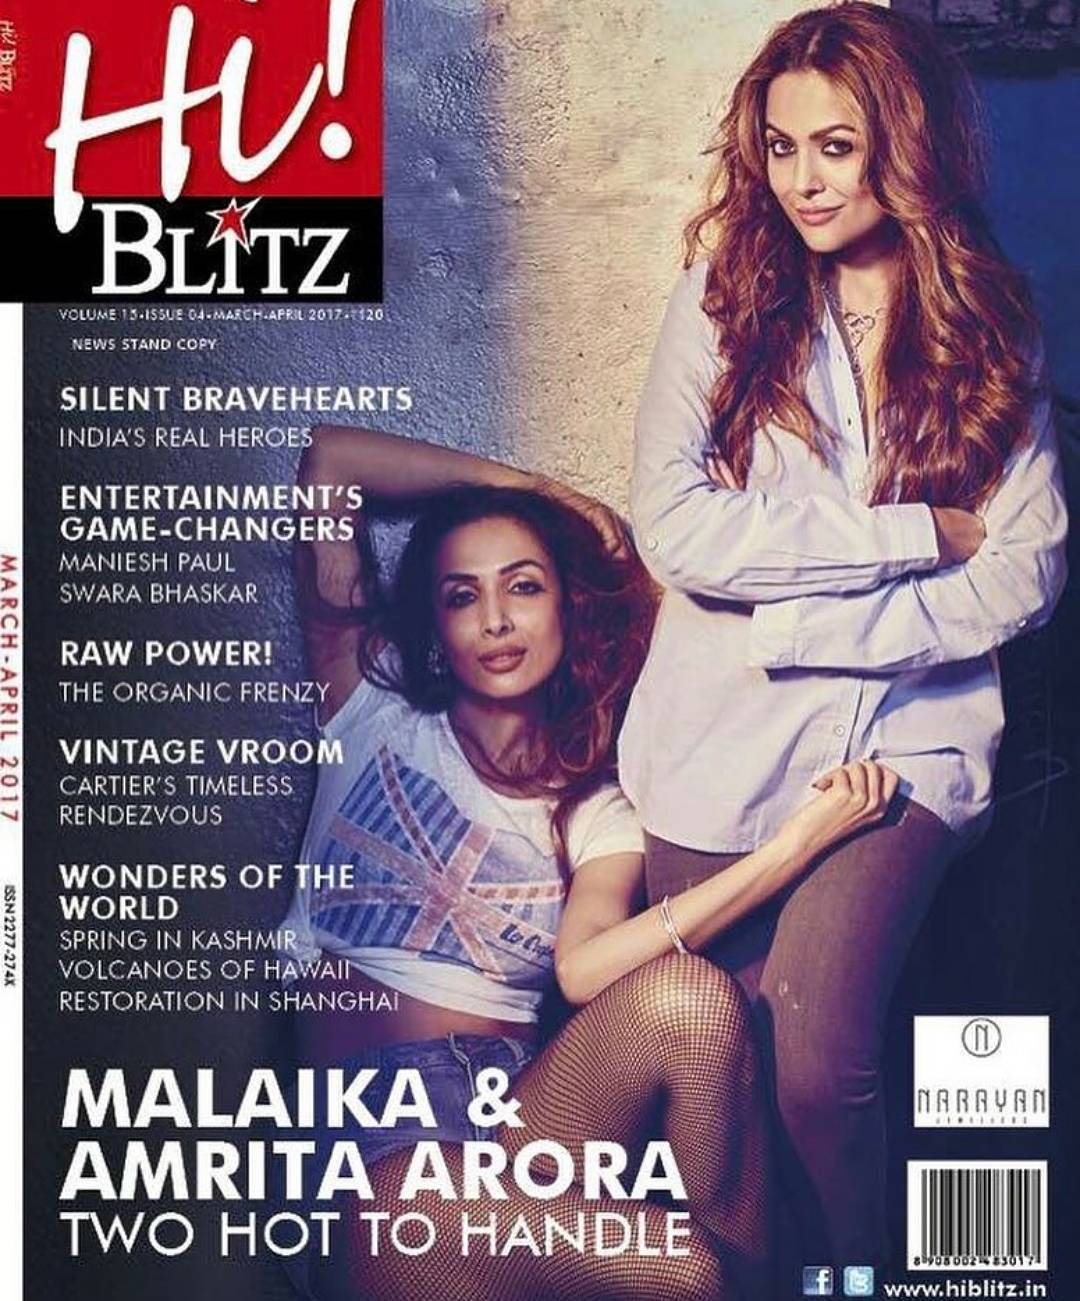 Malaika Arora And Amrita Arora Photoshoot For Hi! Blitz Magazine India March-April 2017 | Celebrities